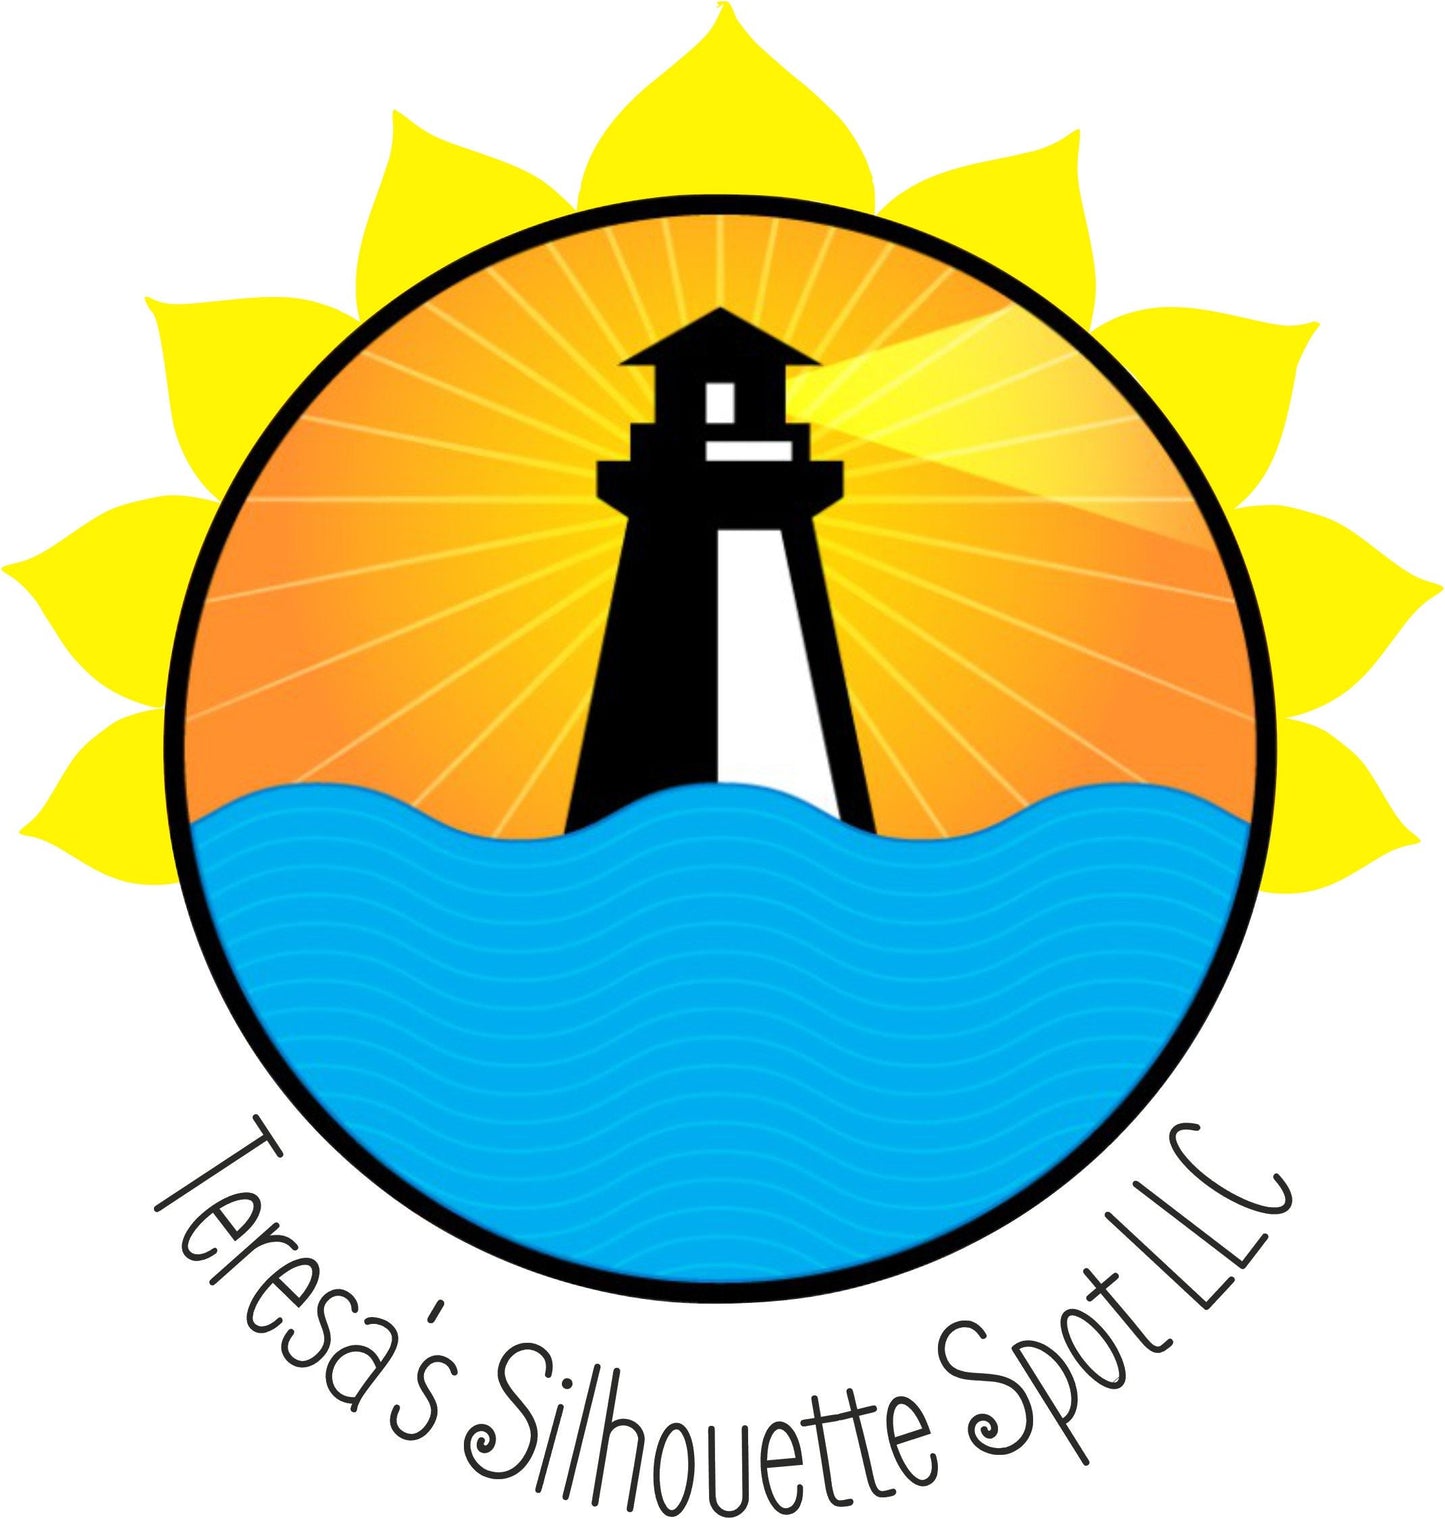 The spot Logo